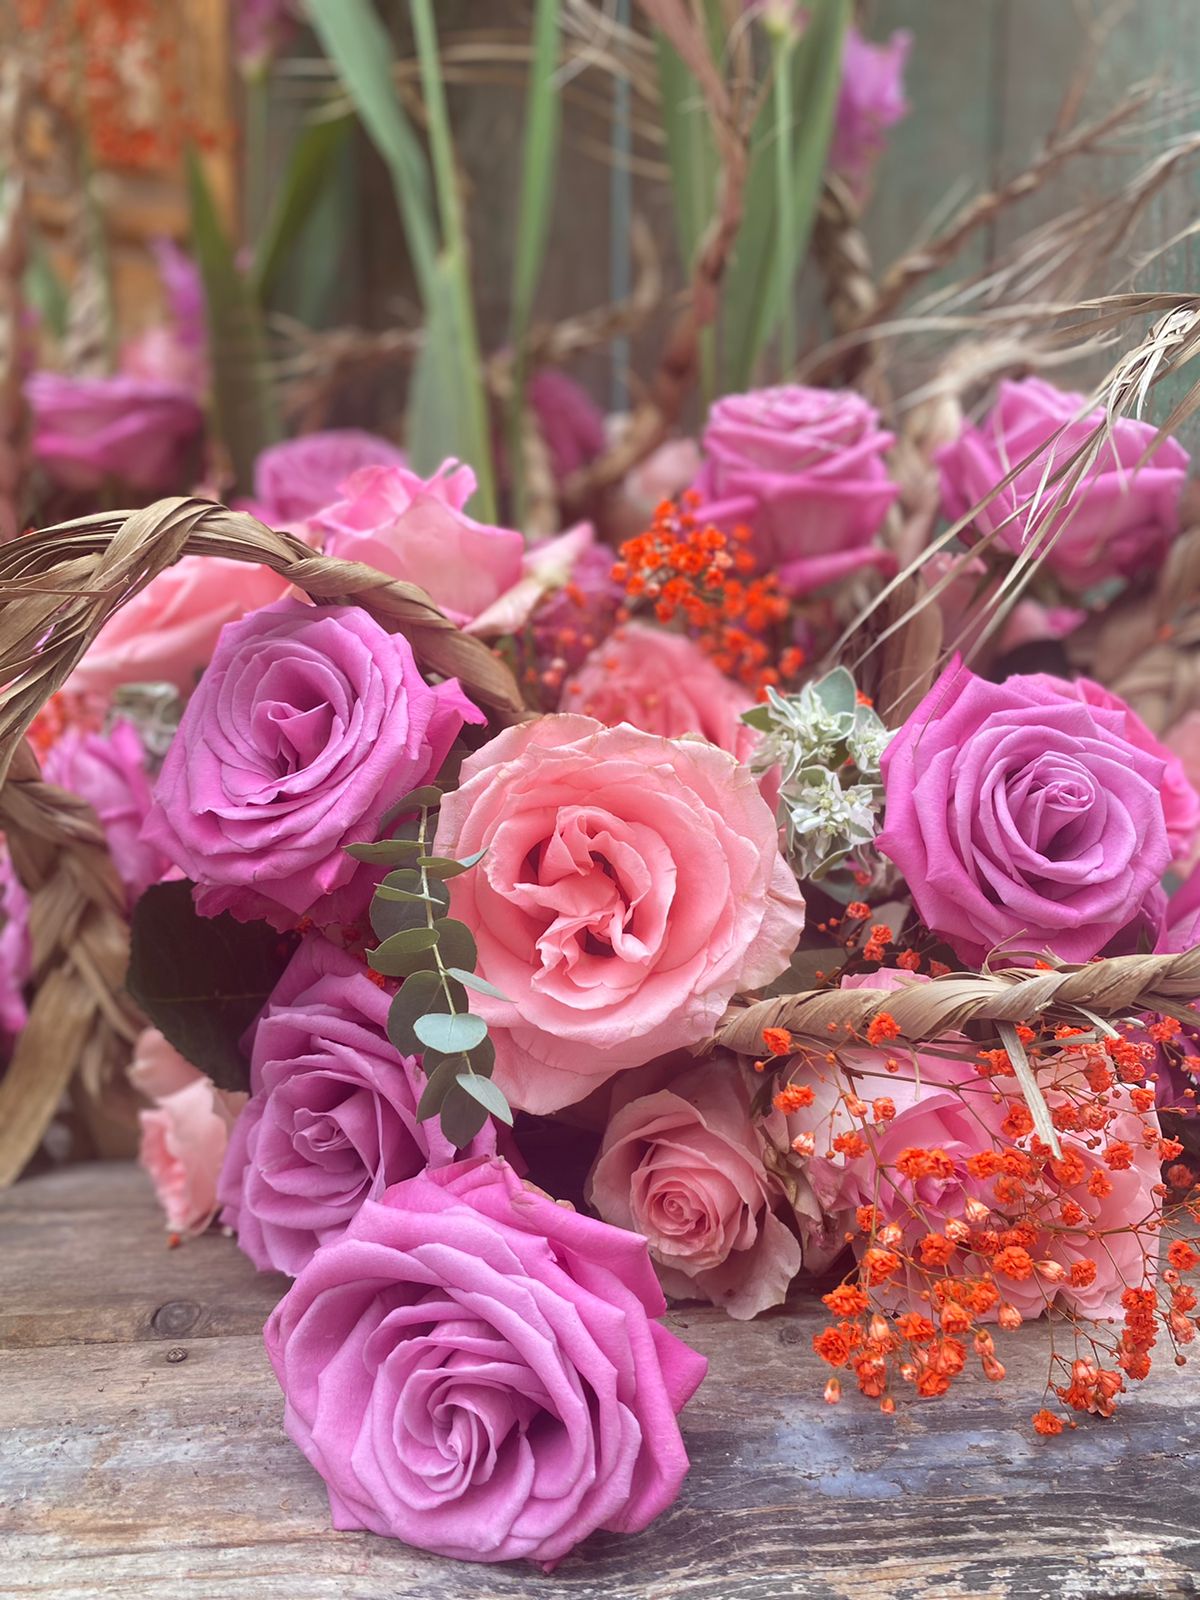 Naranjo Roses Pop Up in Leverano for Arteflorando - Article on Thursd